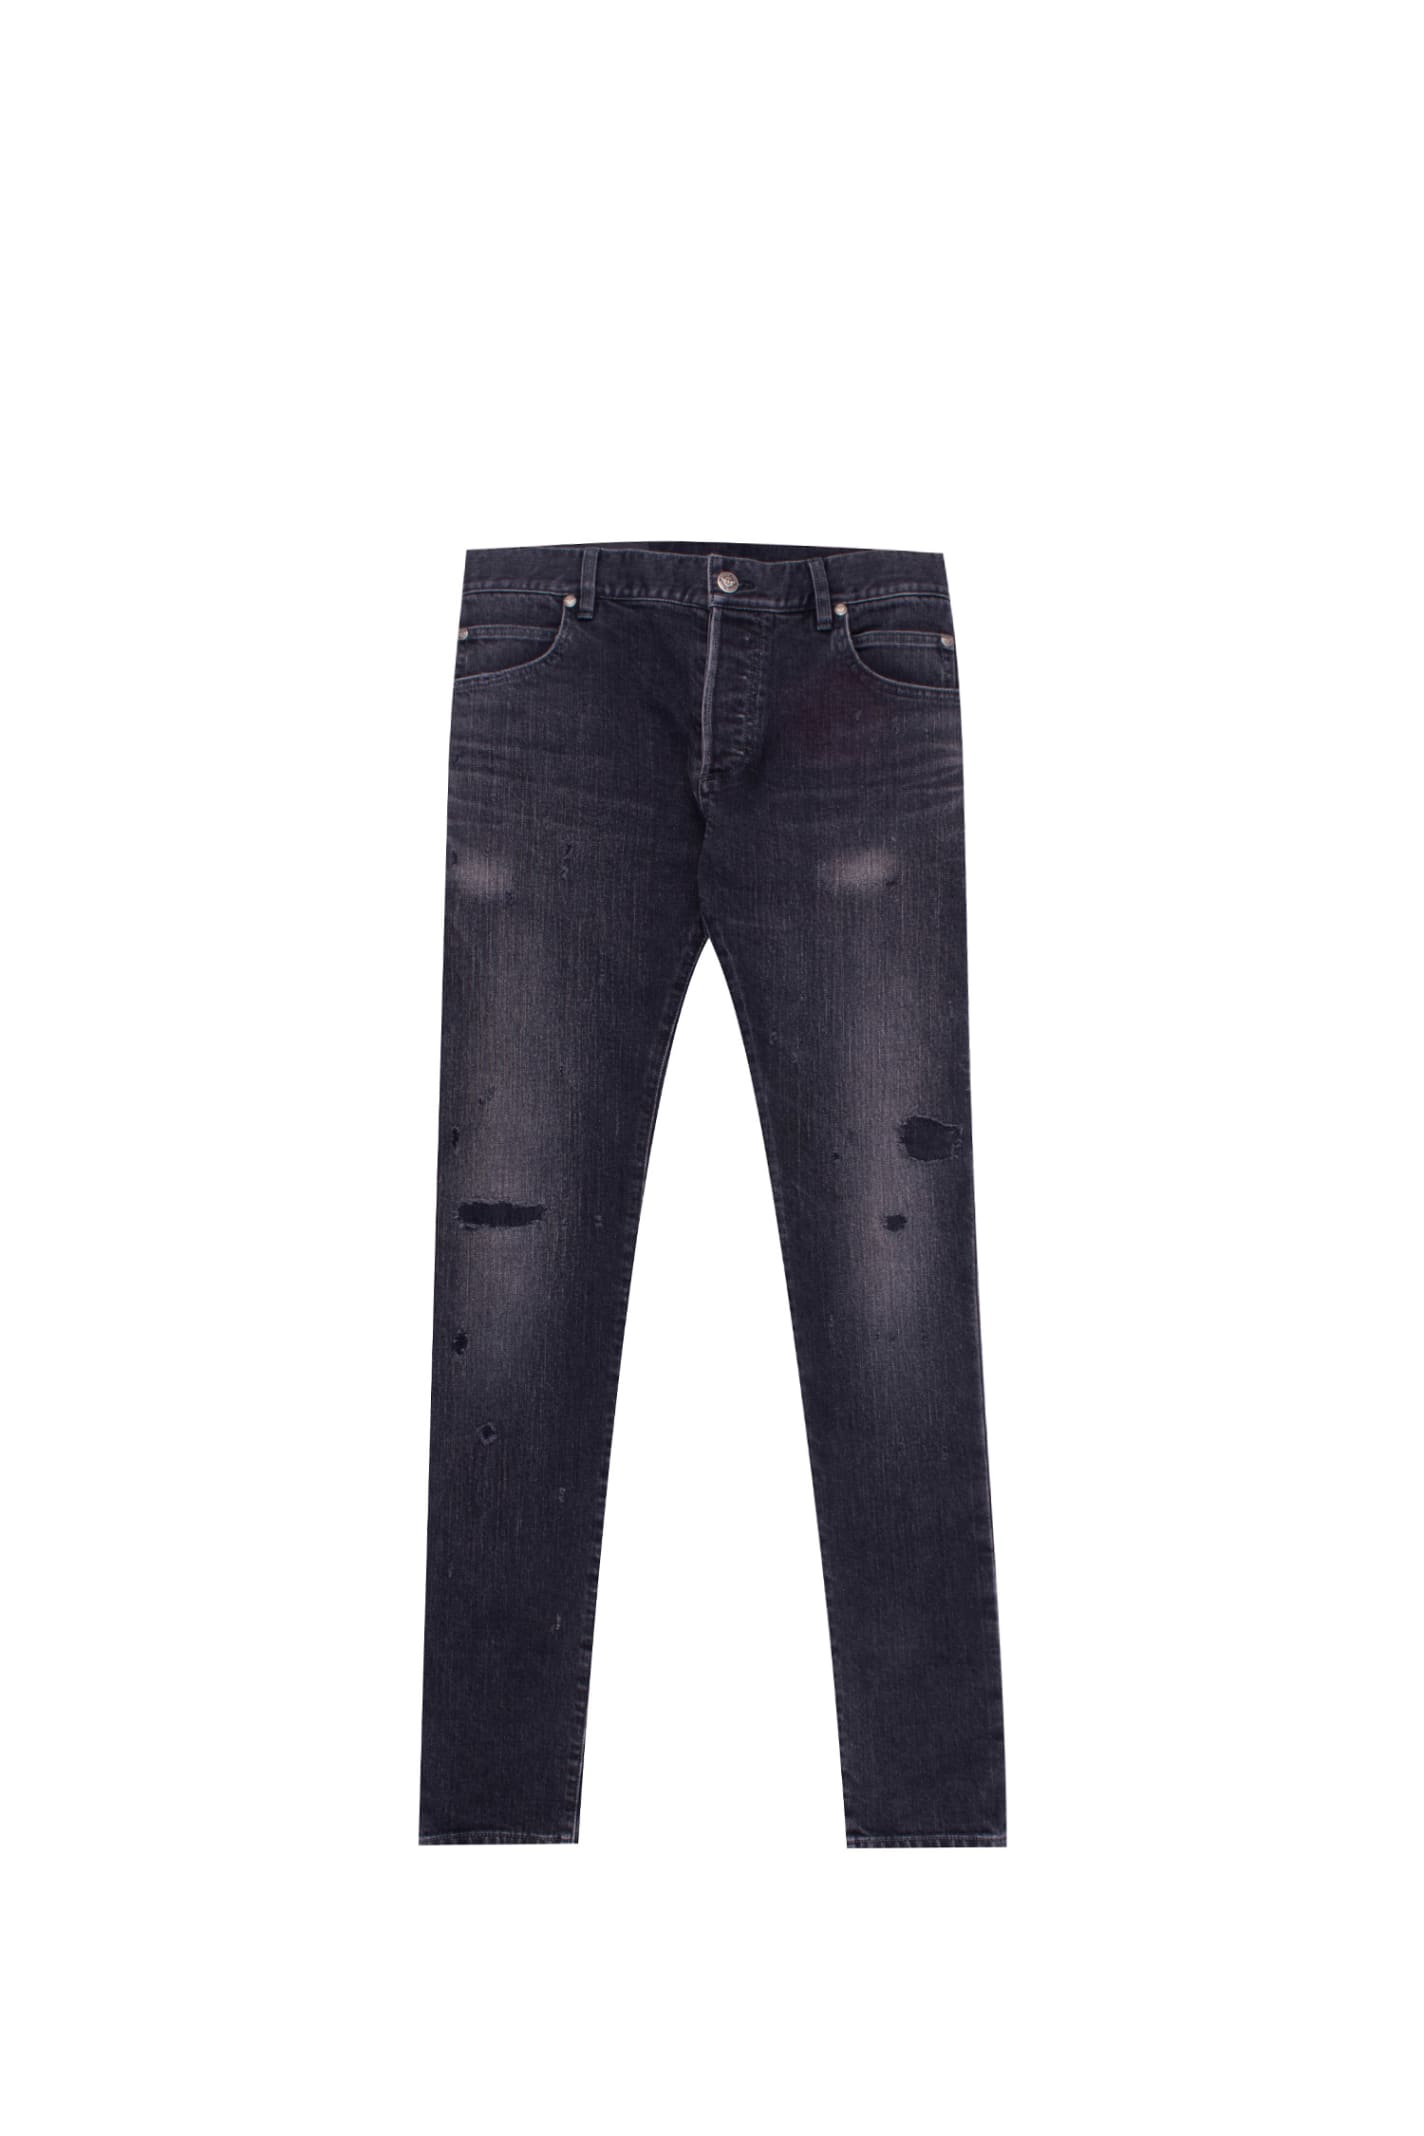 Shop Balmain Cotton Jeans In Black